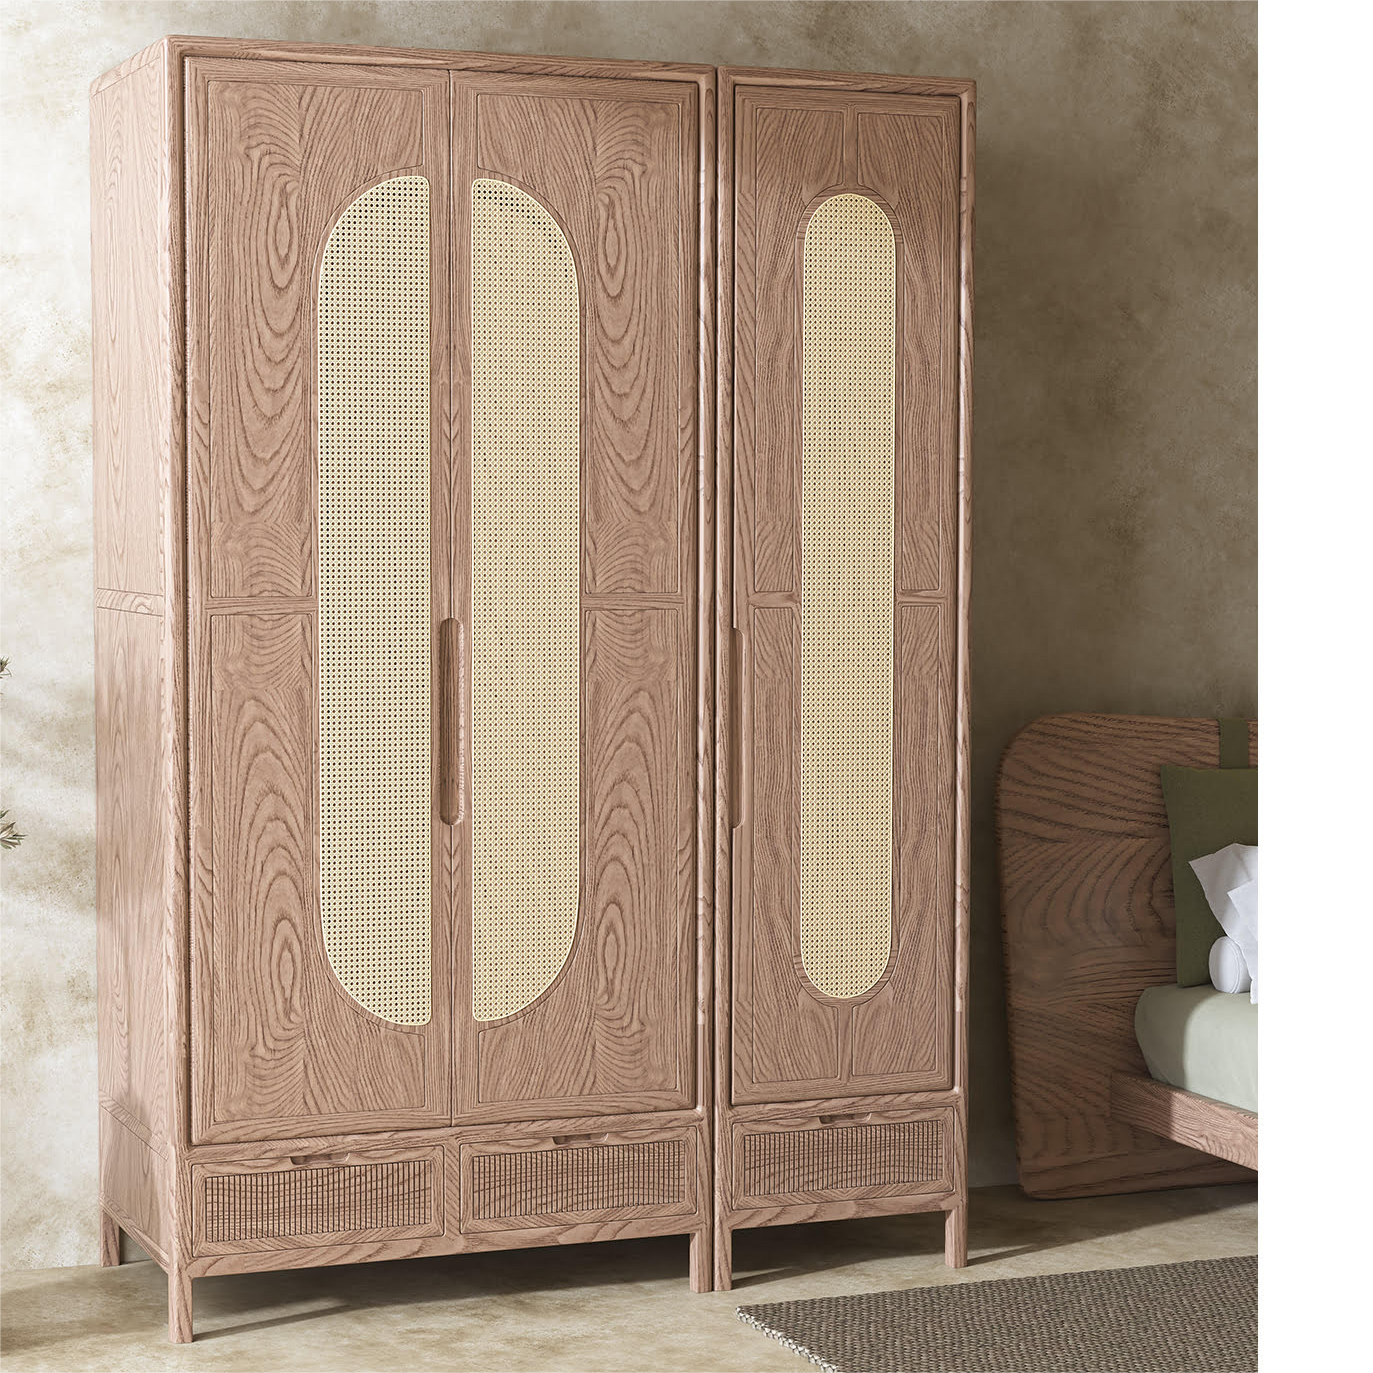 TBG-W01 3 doors wadrobe   modern 3 doors solid wood rattan bedroom wardrobe bedroom furniture,modern wardrobe,wooden wardrobe with rattan,wardrobe for hotel,wardrobes